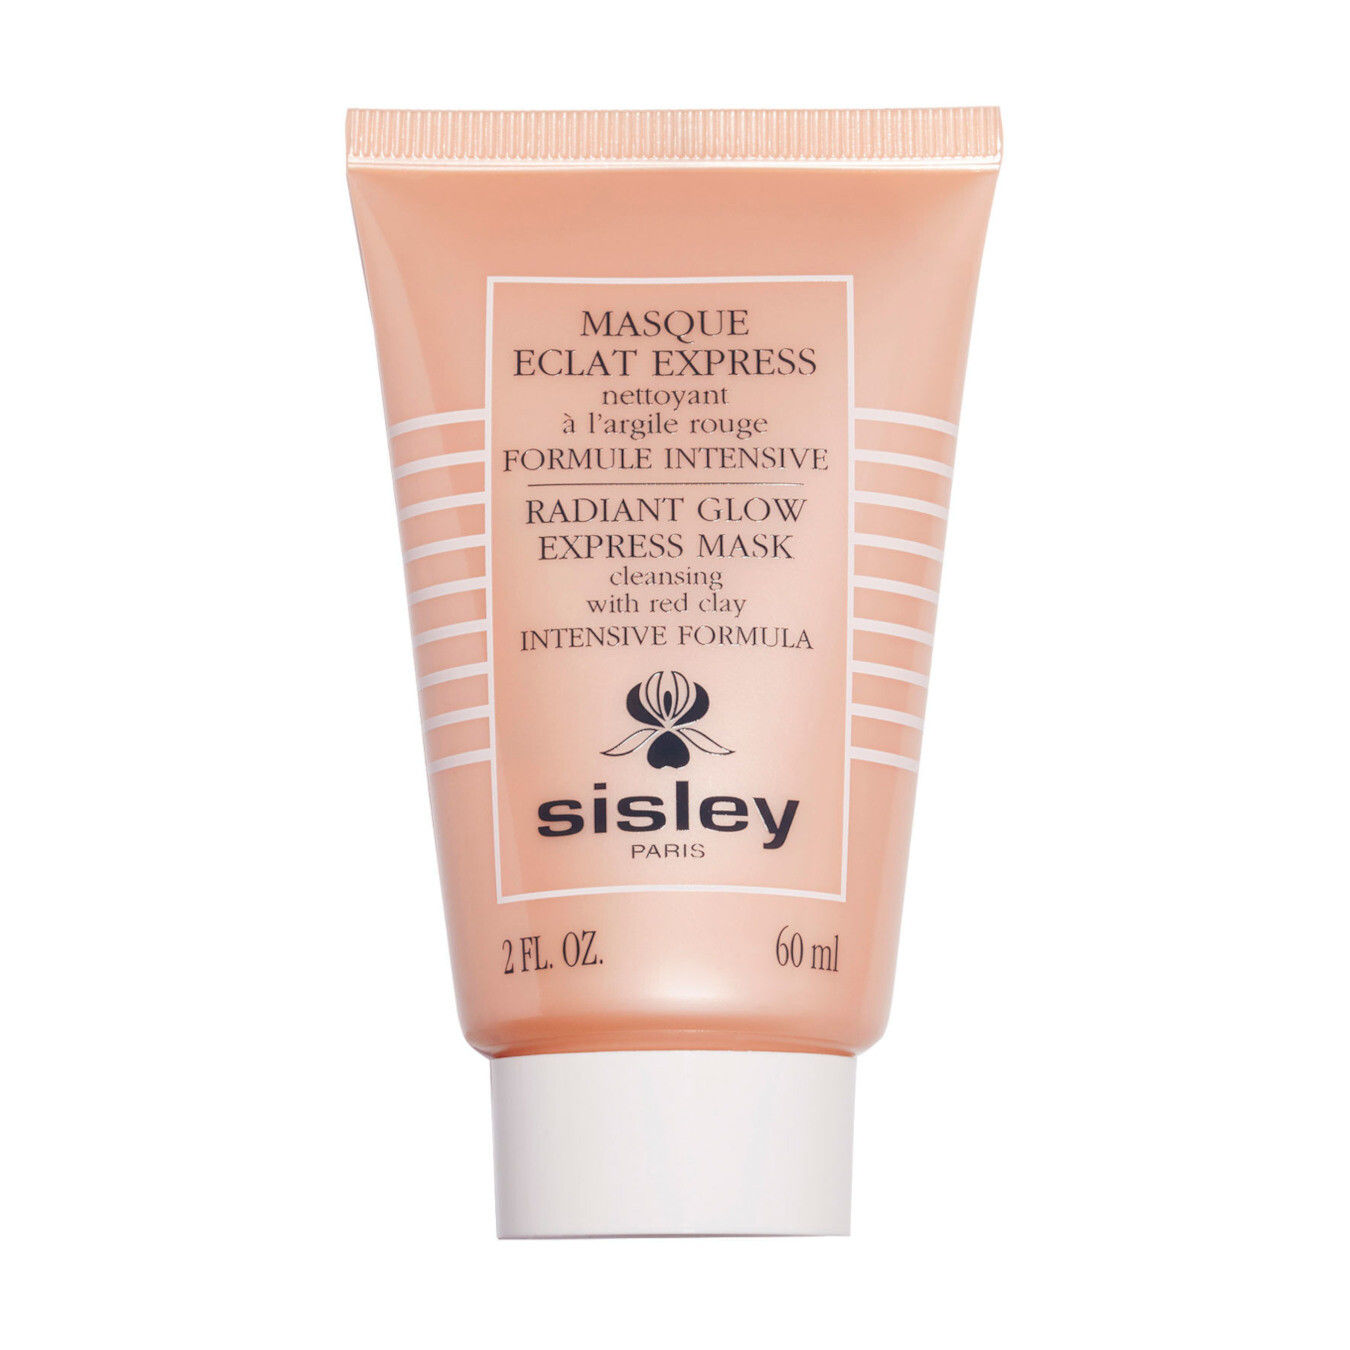 Sisley Masque Eclat Express Formule Intensive von Sisley